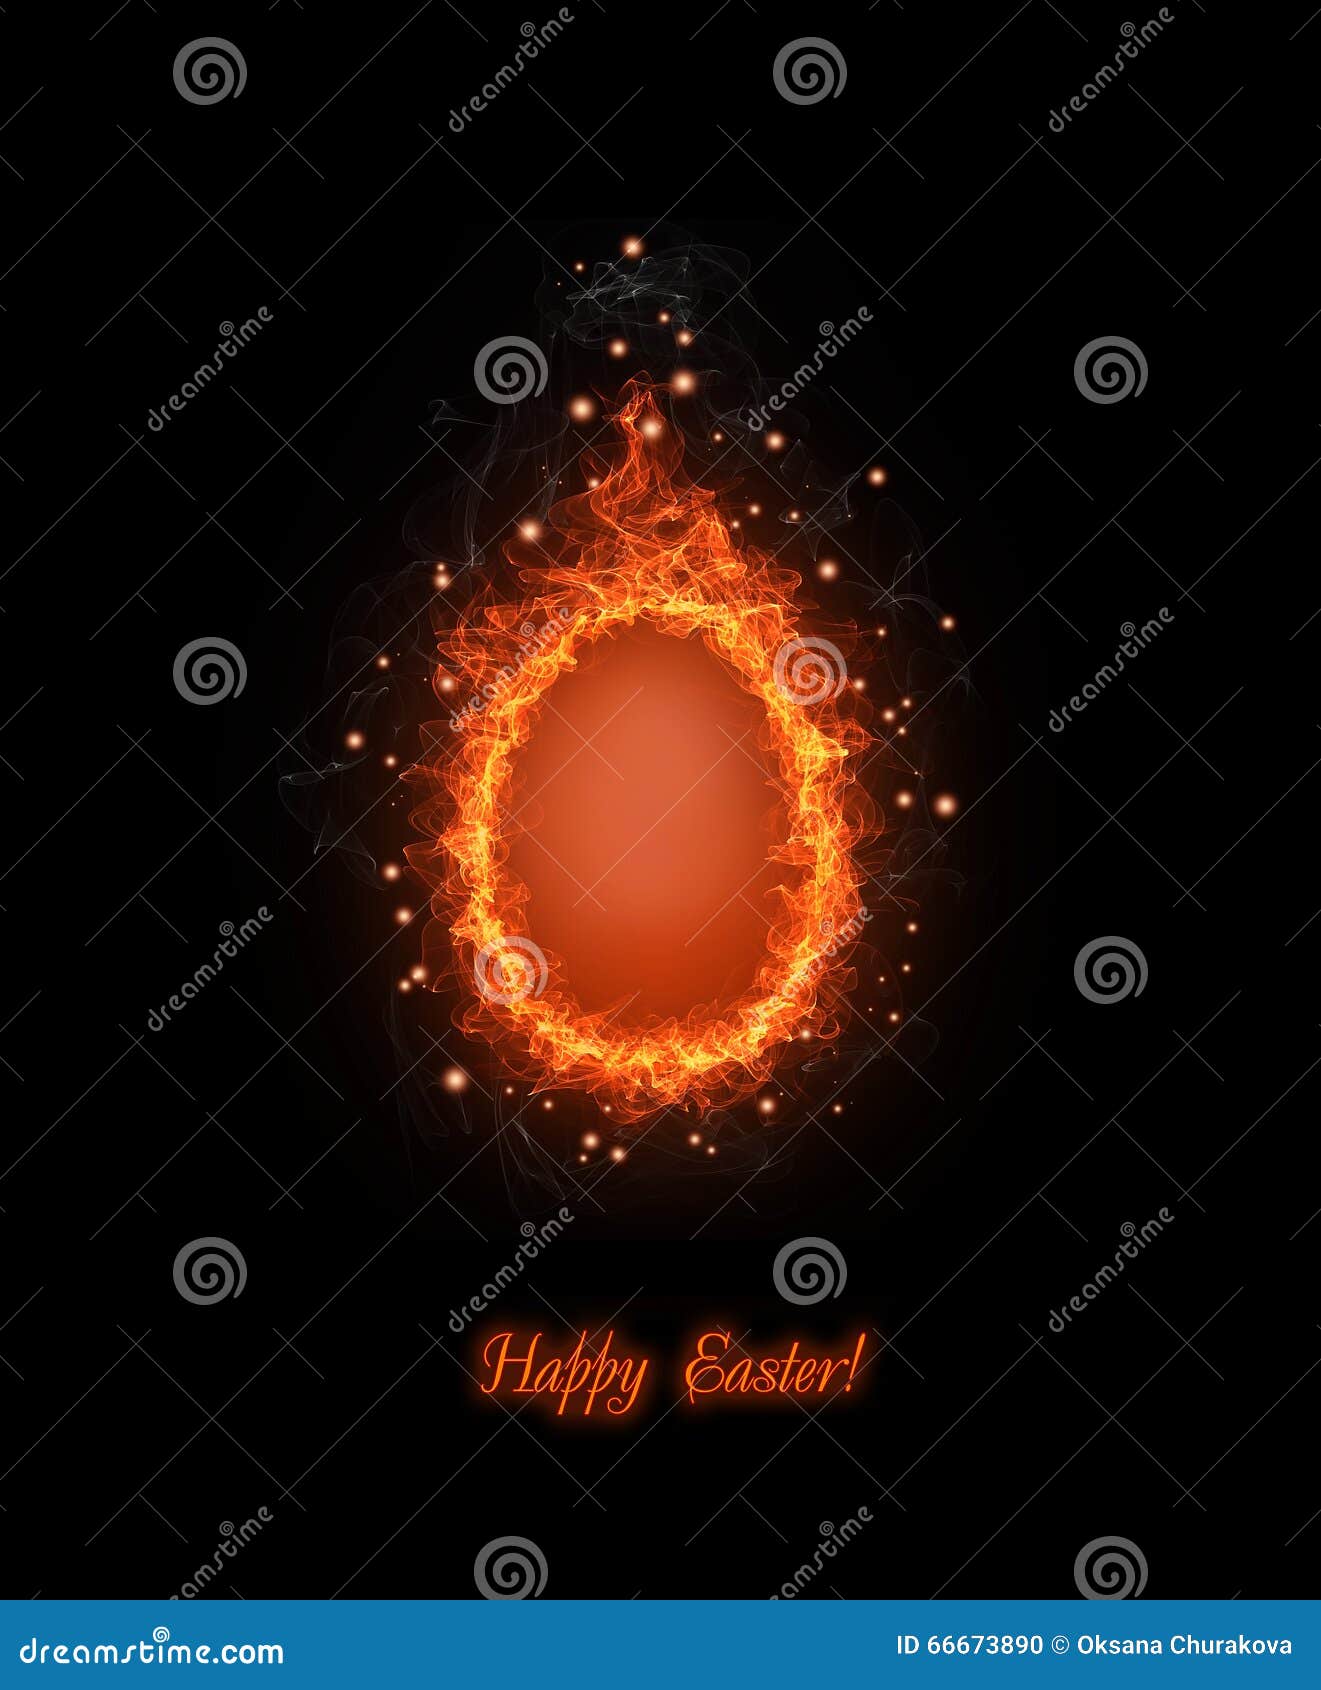 Easter egg fire burning stock illustration. Illustration of background